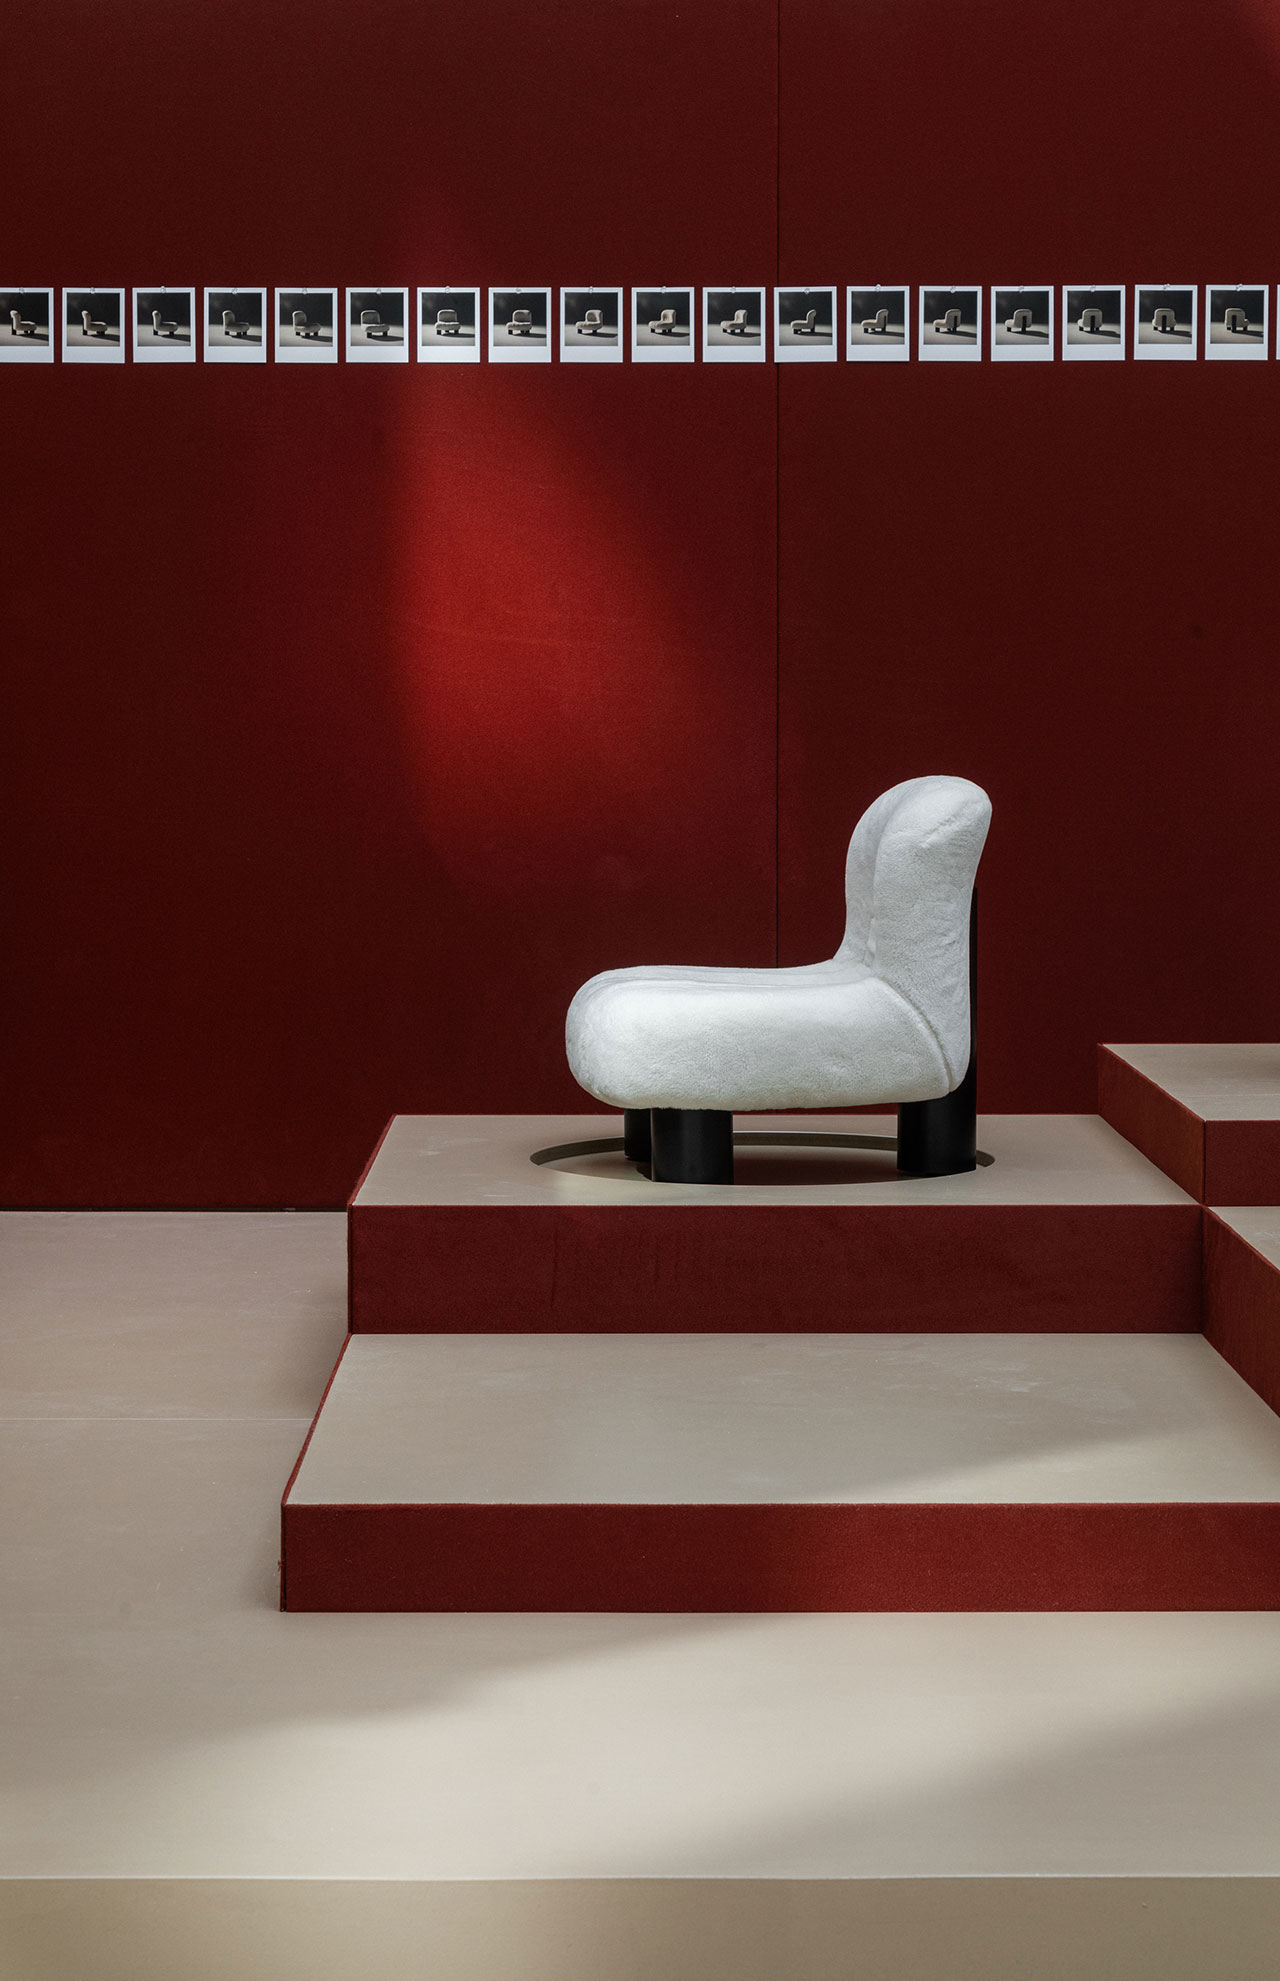 Botolo Armchair - Low version. Designed by Cini Boeri for artflex in 1973. Upholstery: Loro Piana Interiors Cashfur in Biancore colour.
Photography © Loro Piana.